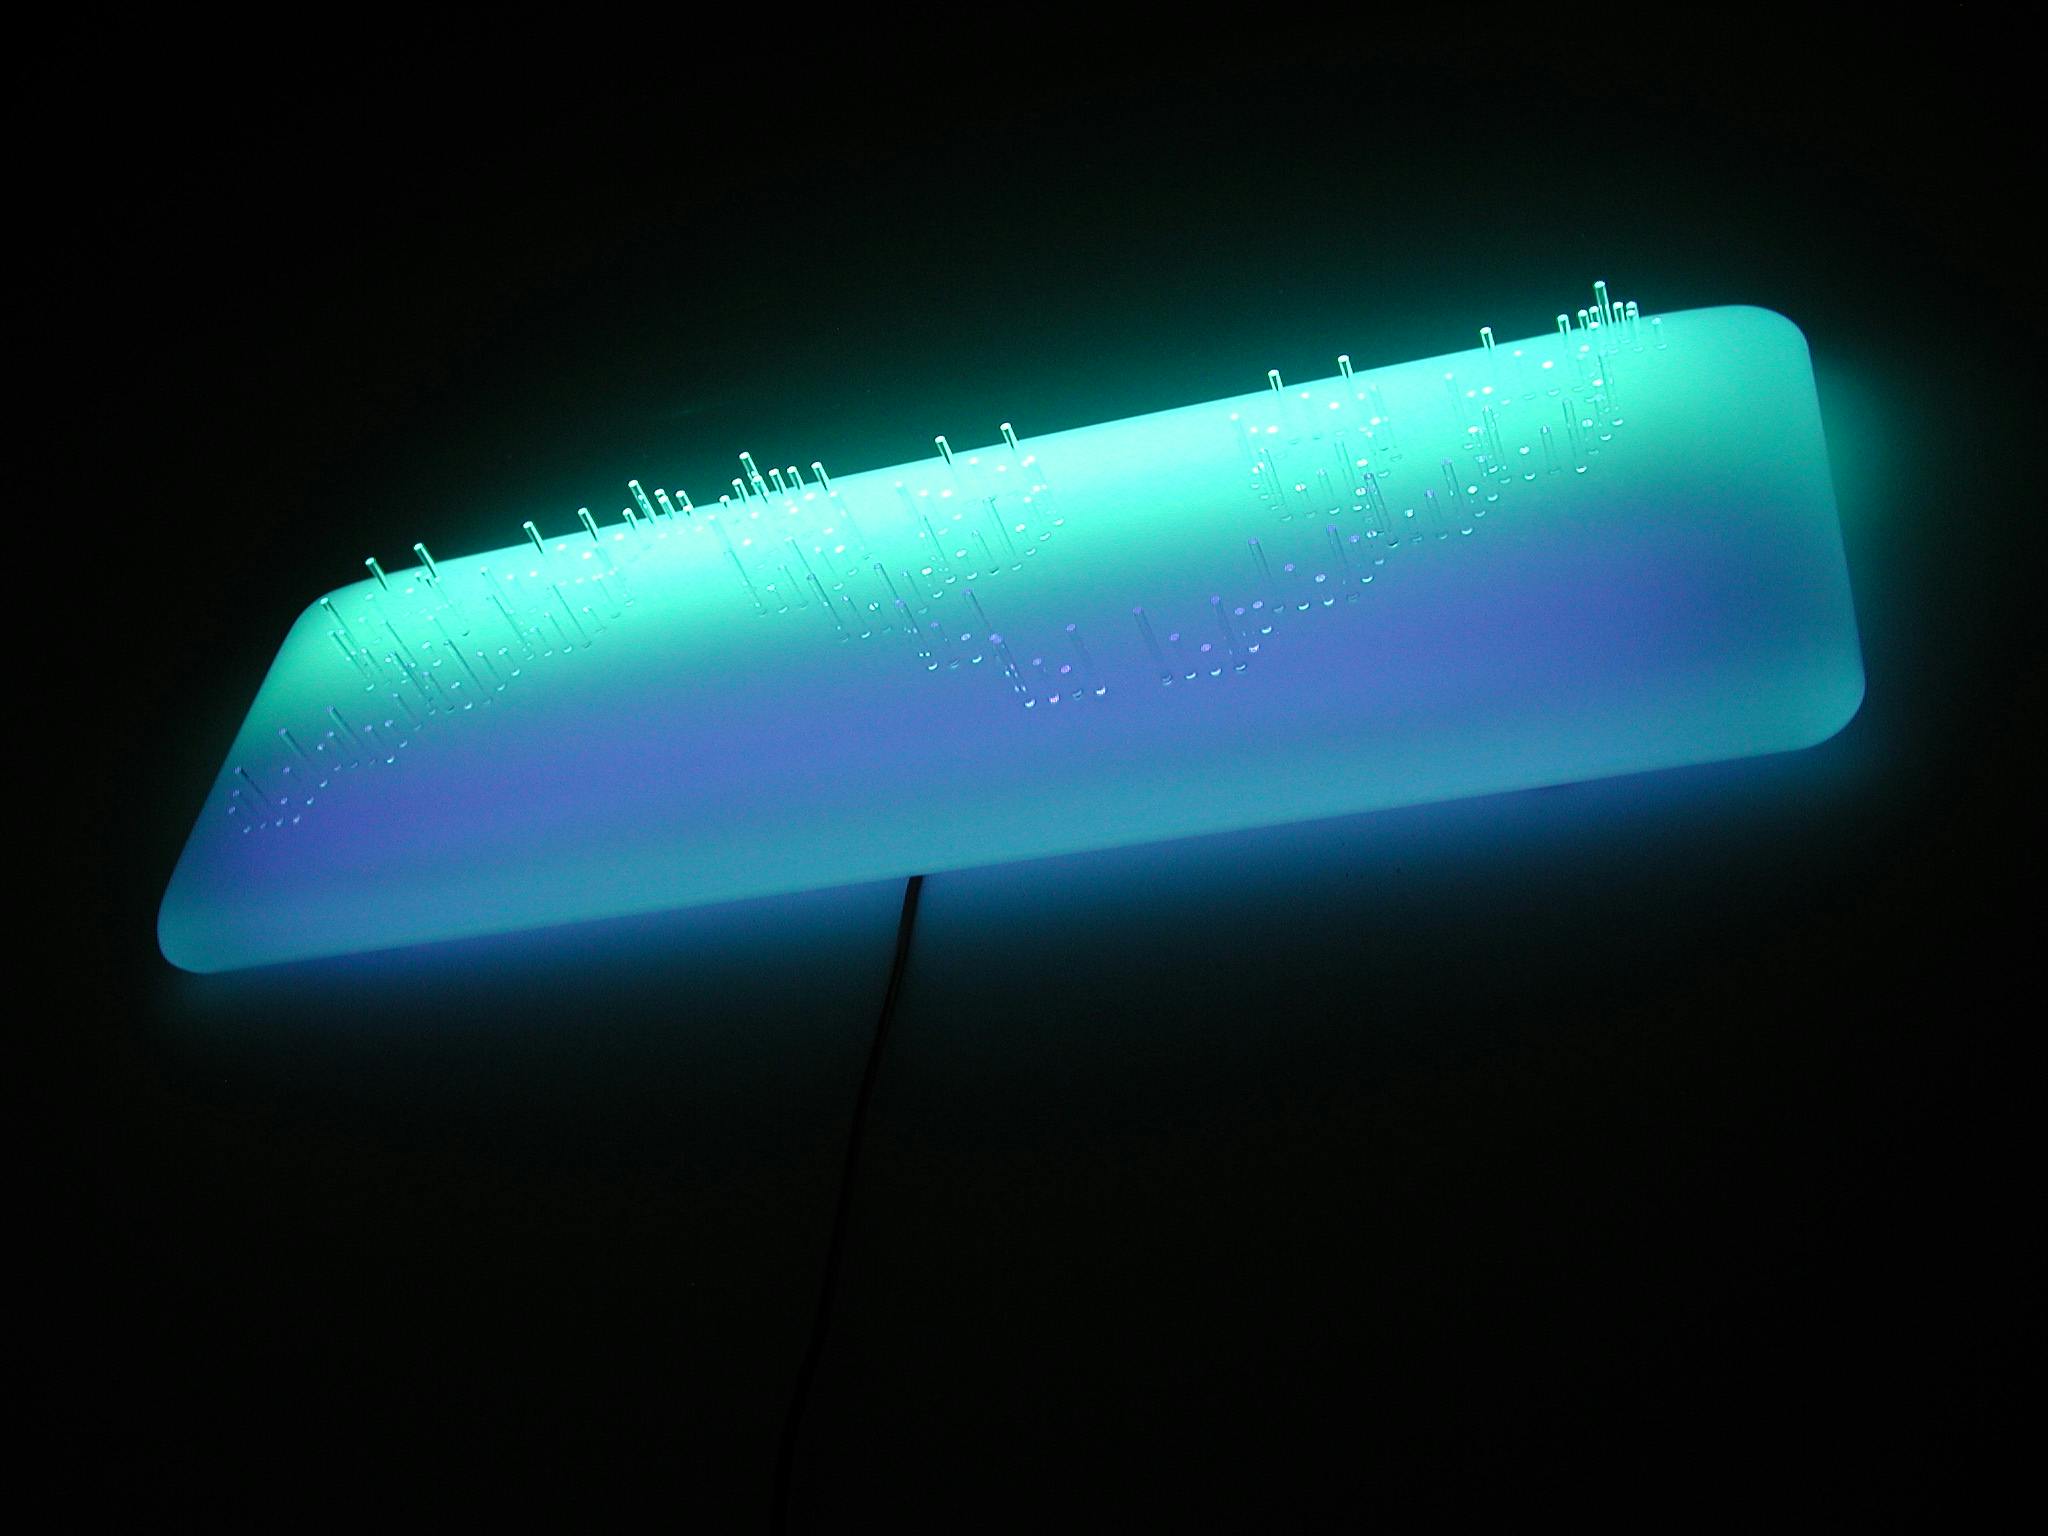 An LED light